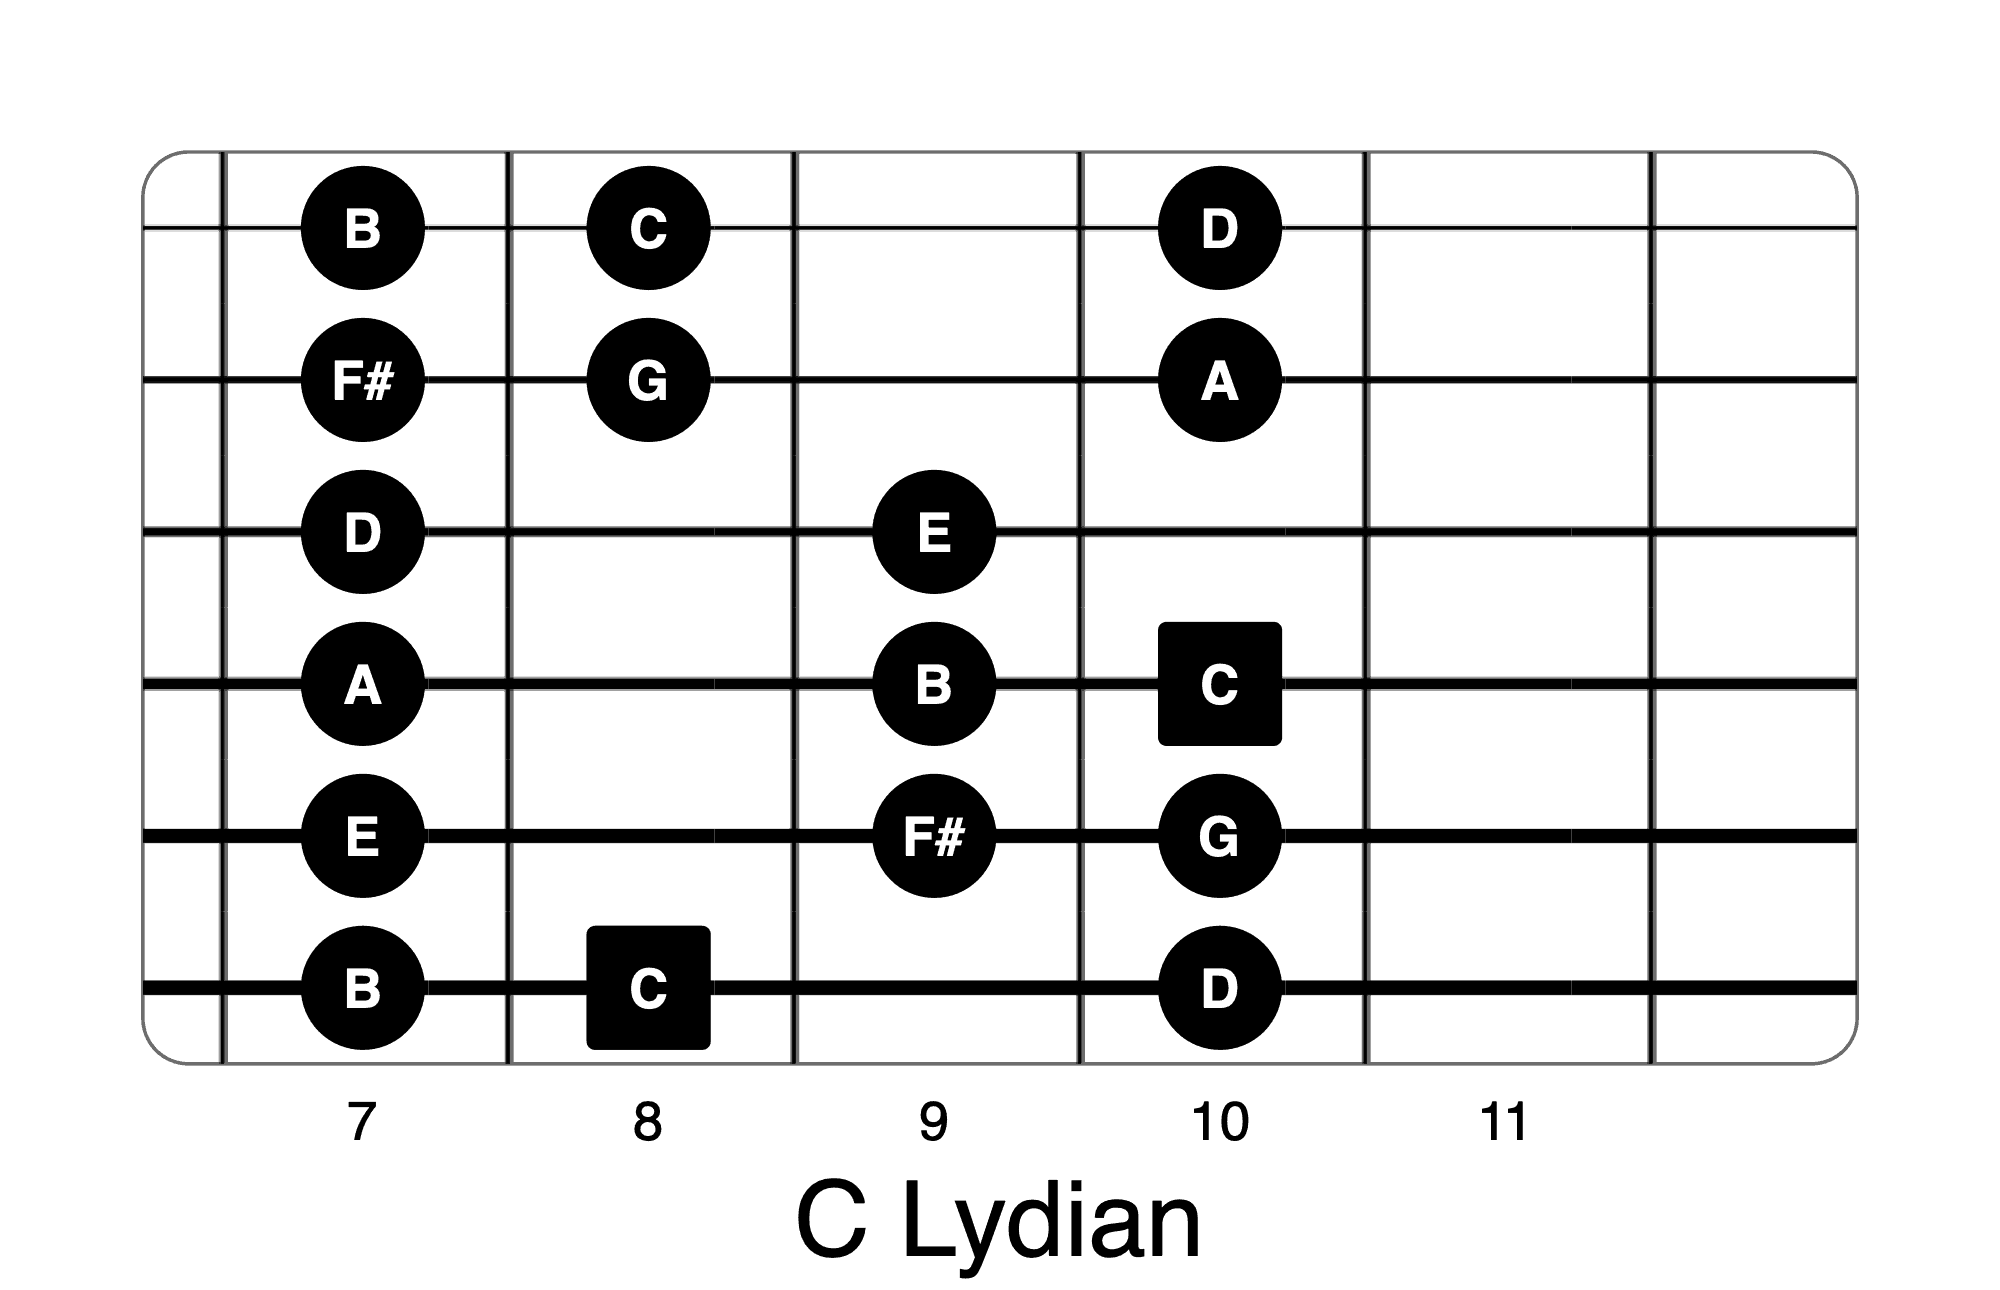 C Lydian Life In 12 Keys